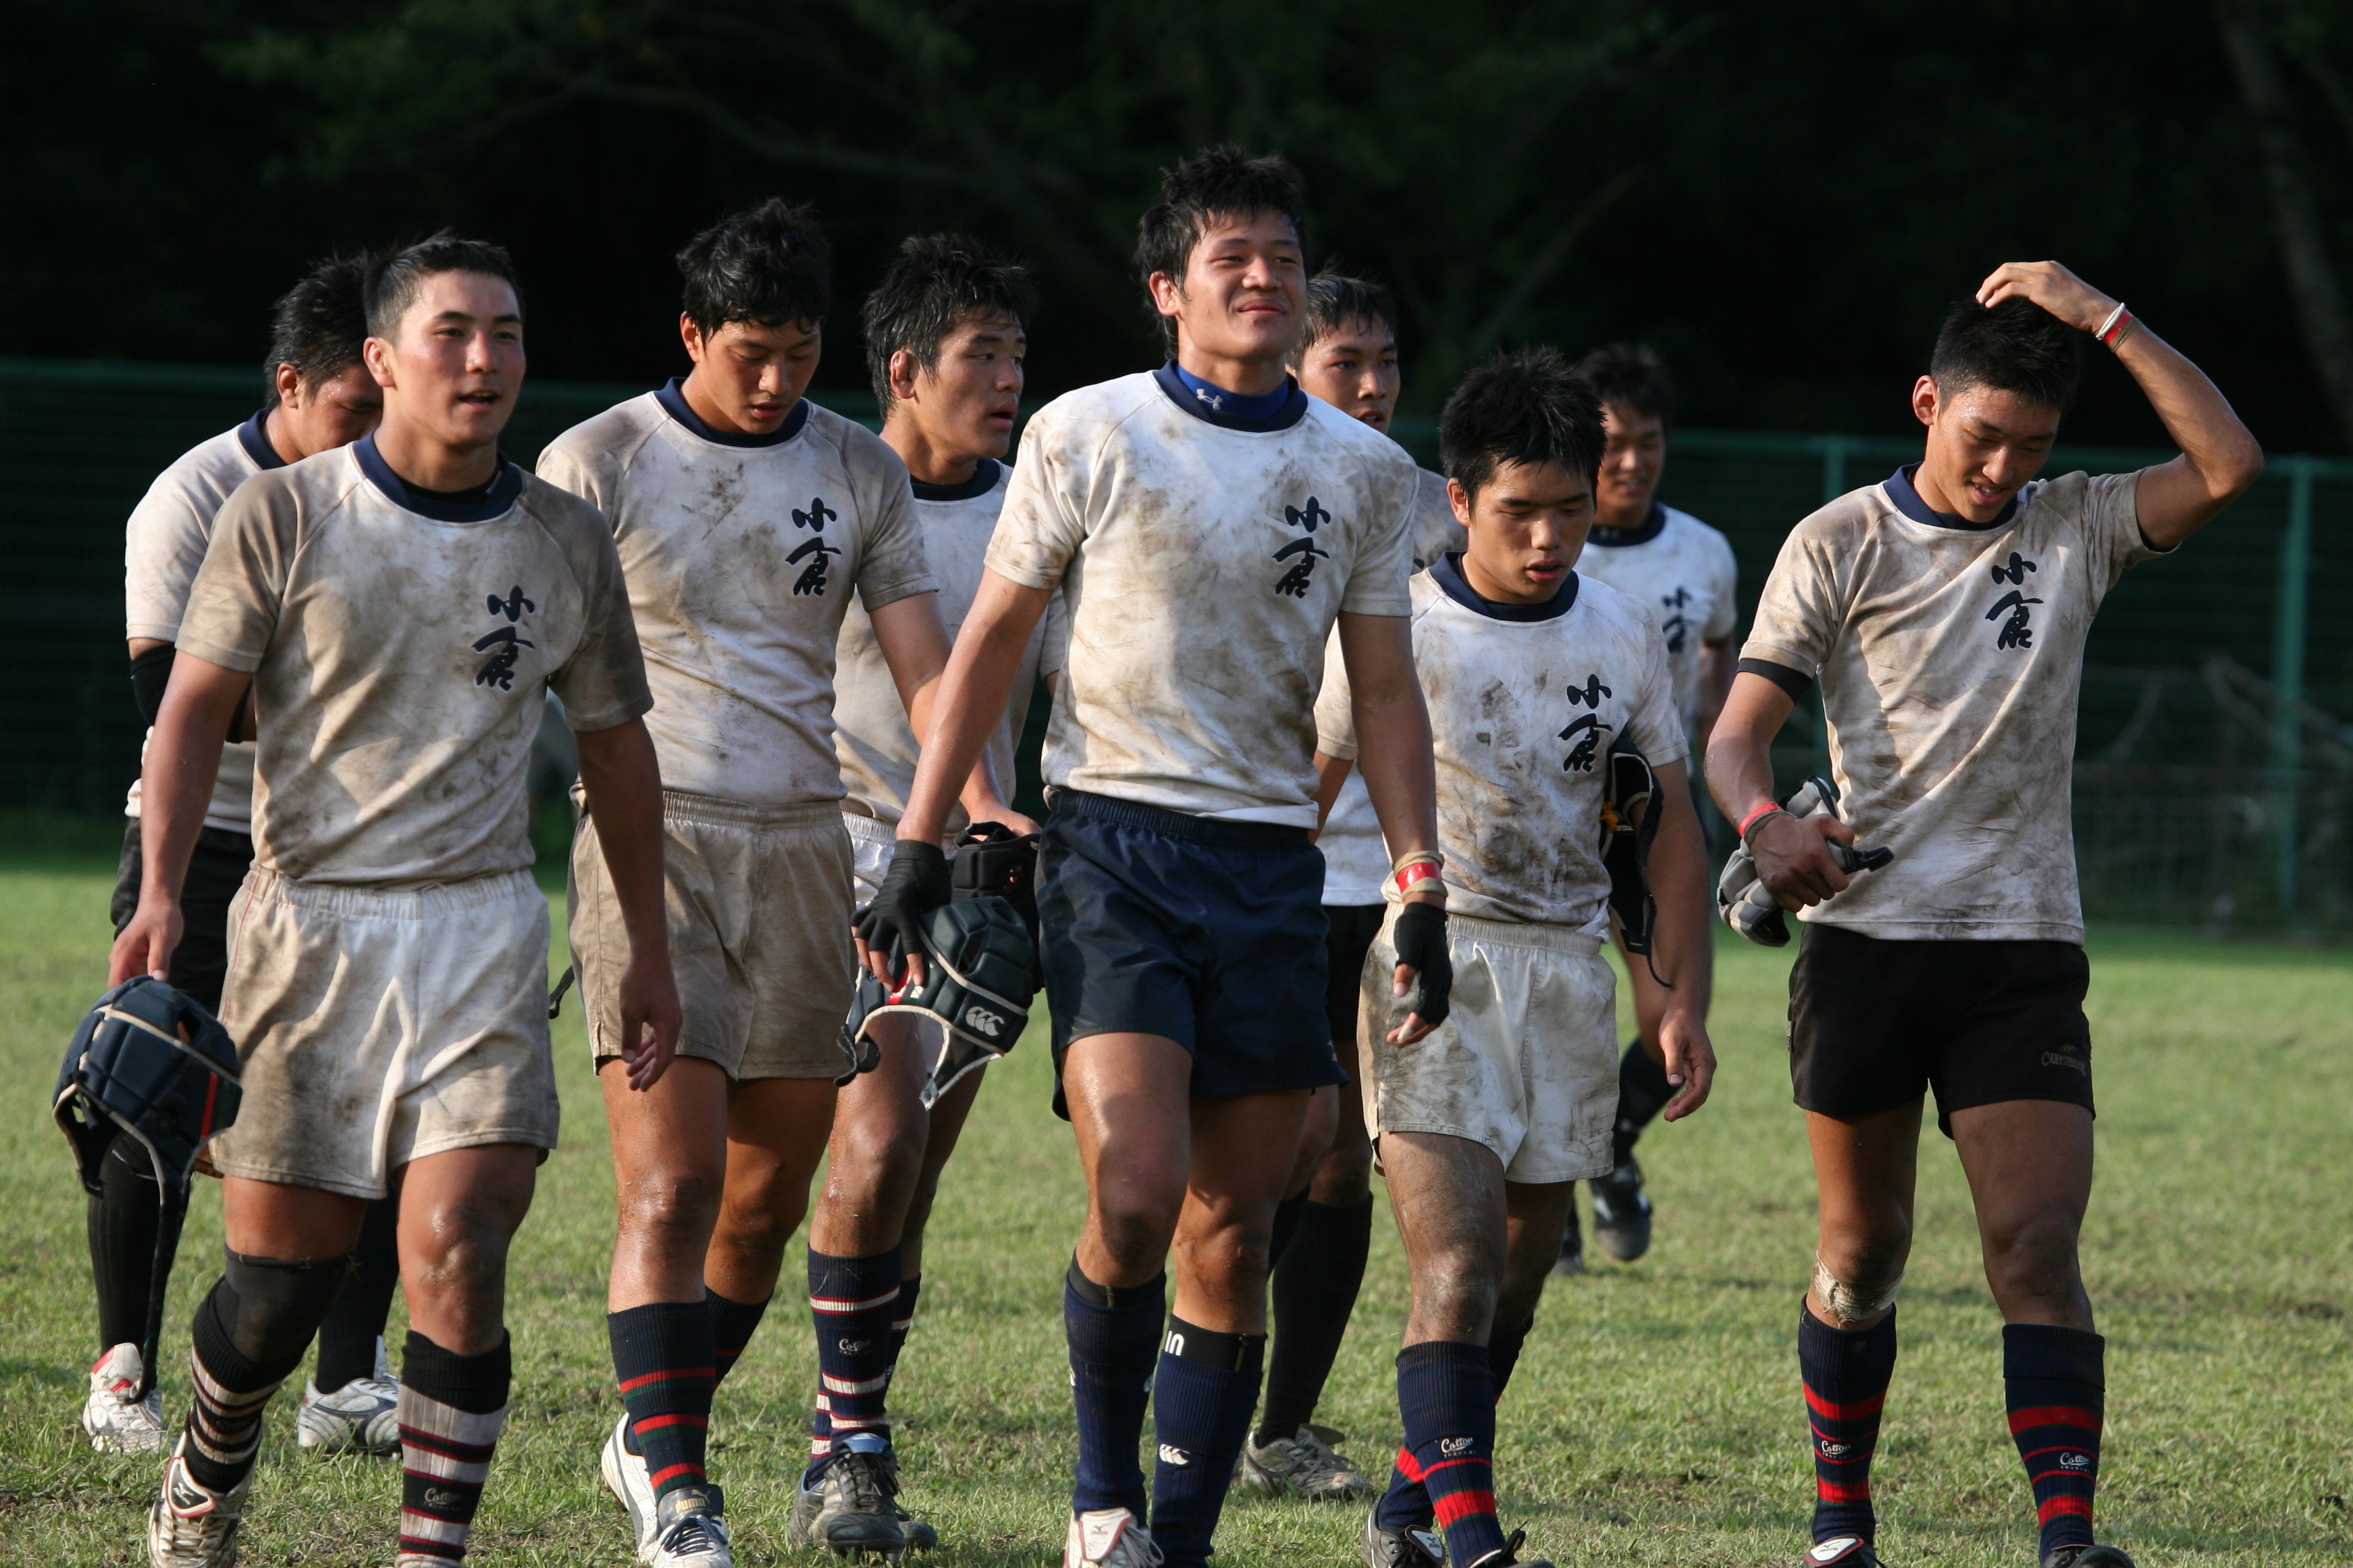 http://kokura-rugby.sakura.ne.jp/10%EF%BC%9A%E8%A9%A6%E5%90%88%E7%B5%82%E3%82%8F%E3%81%A3%E3%81%A6.JPG